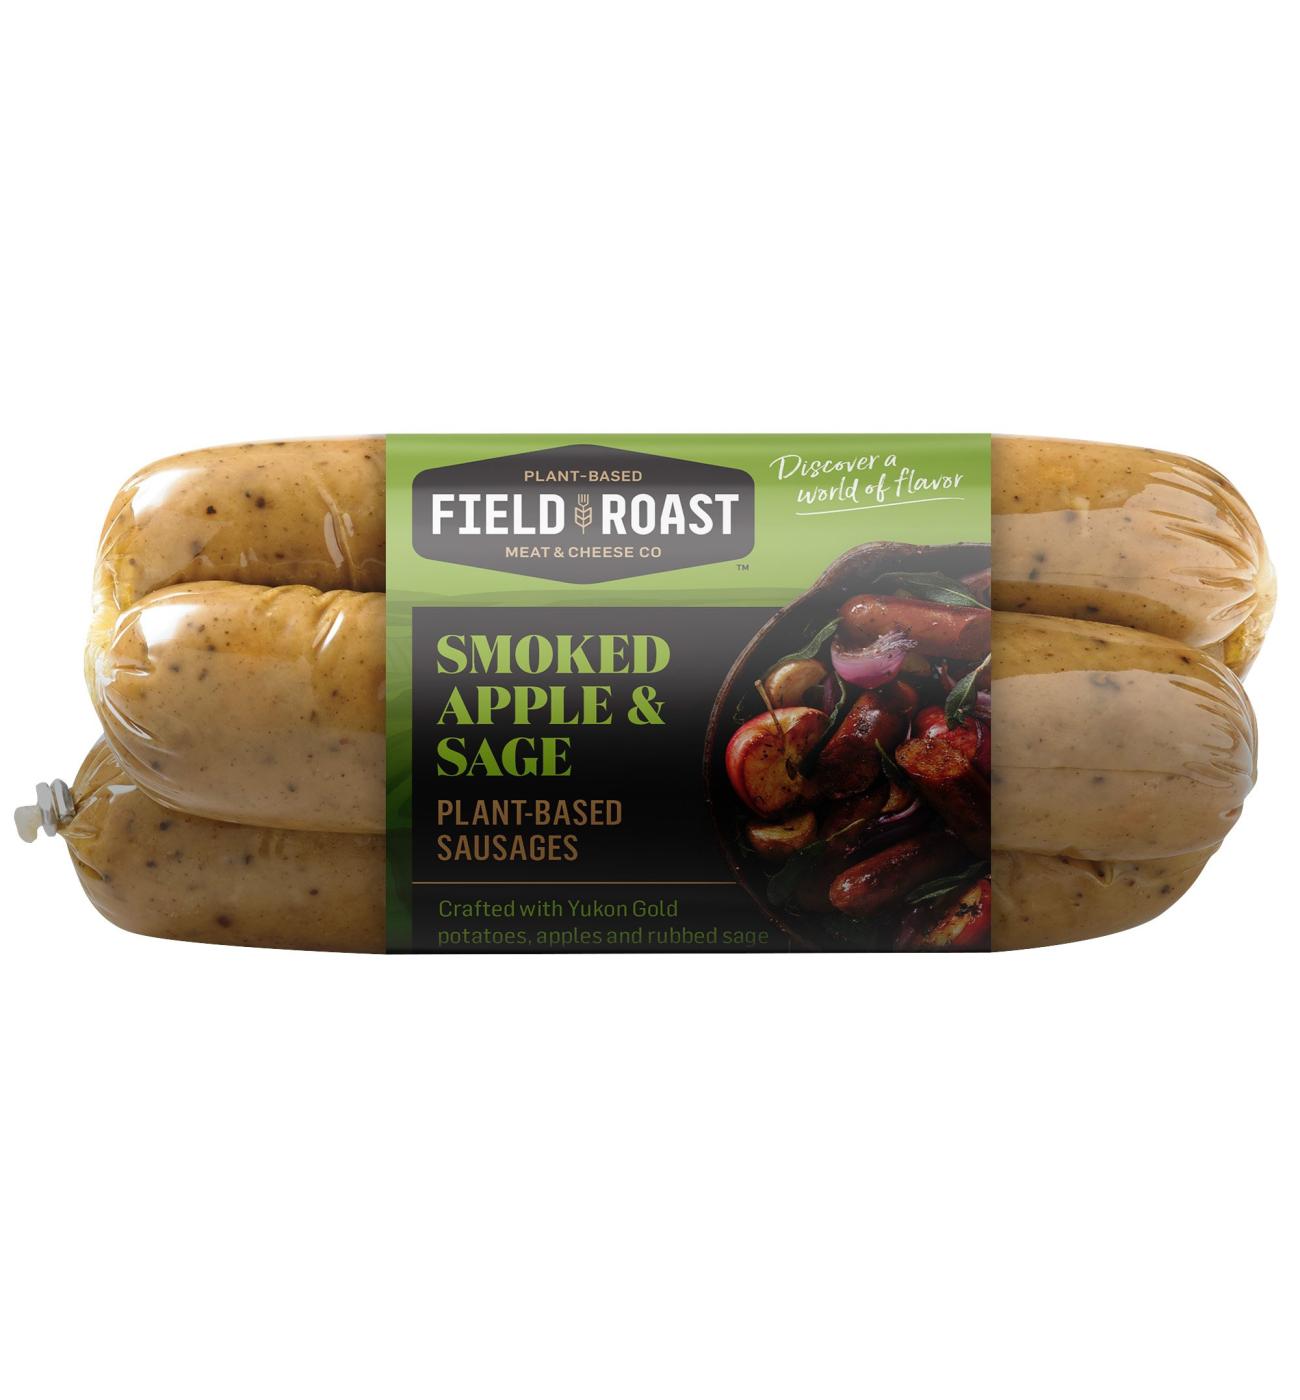 Field Roast Smoked Apple & Sage Plant-Based Sausages; image 1 of 2